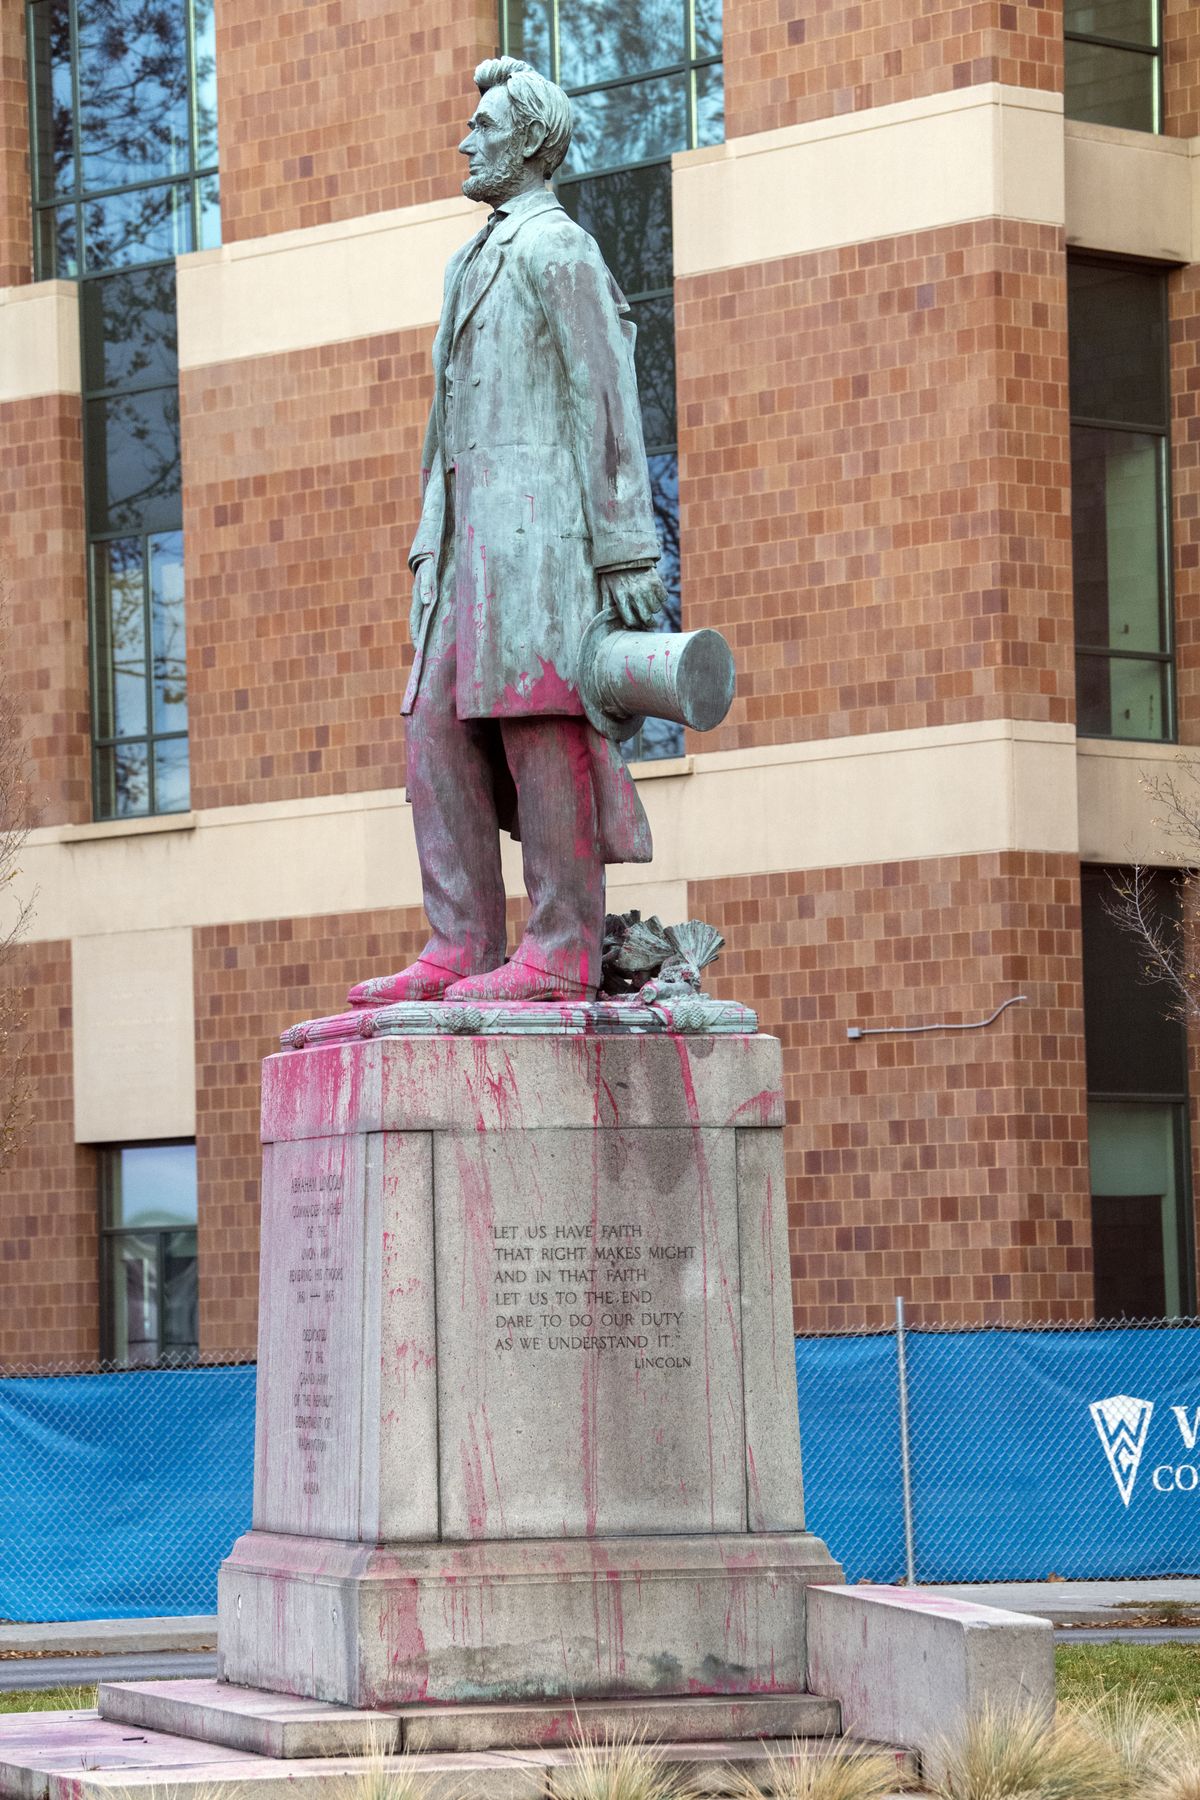 Spokane's Lincoln statue vandalism is getting international attention